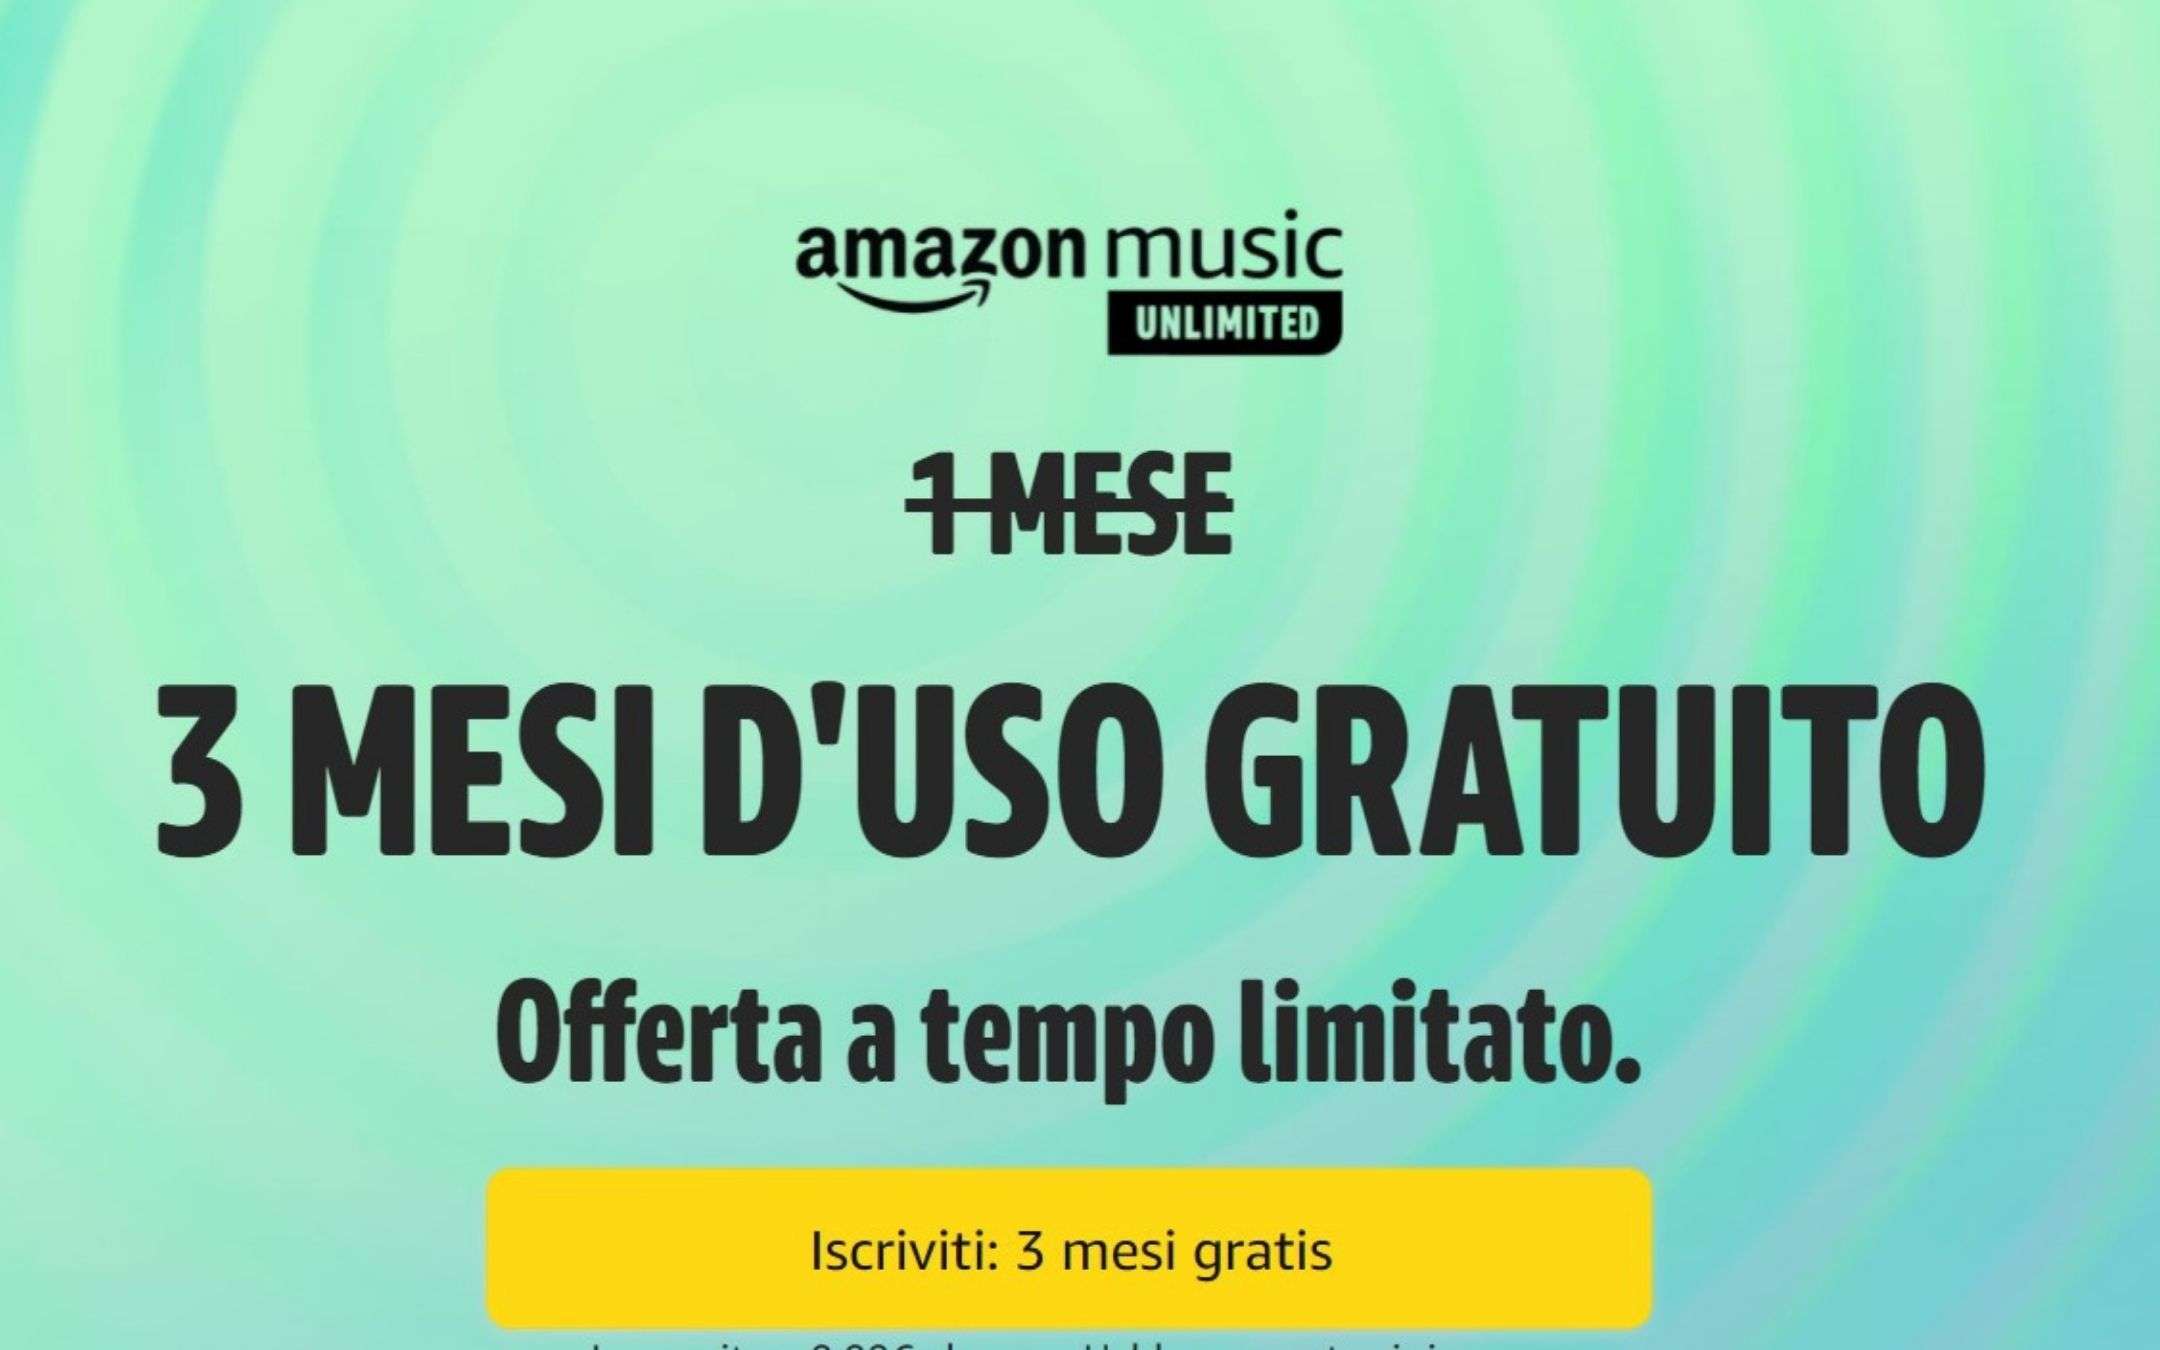 Amazon Music UNLIMITED: costa zero euro per ben 3 mesi